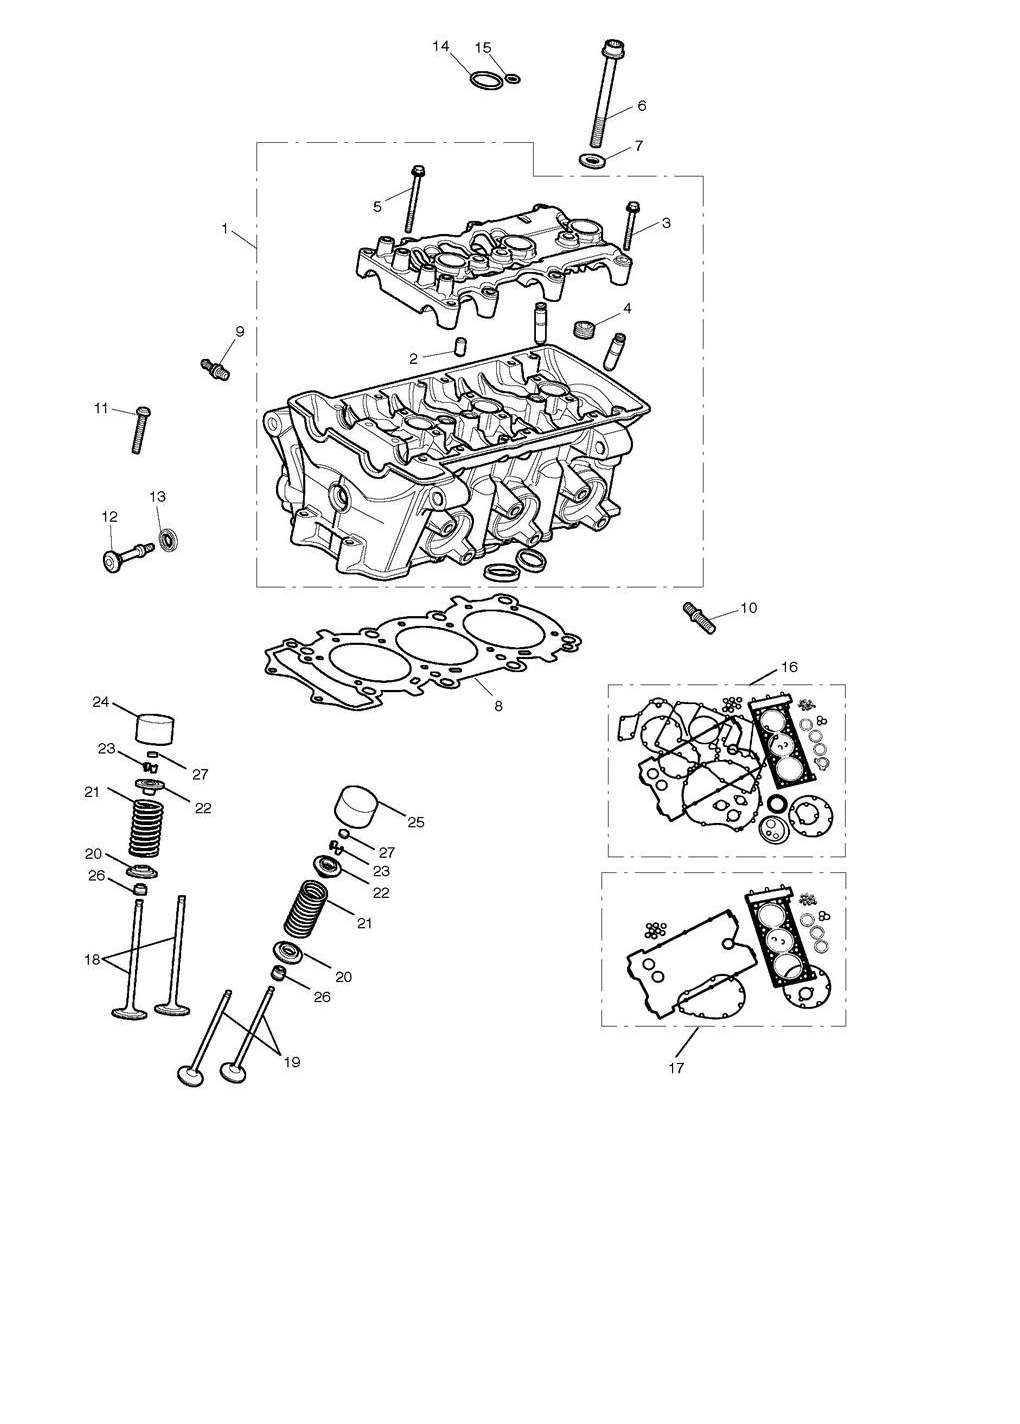 cylinder head & valves